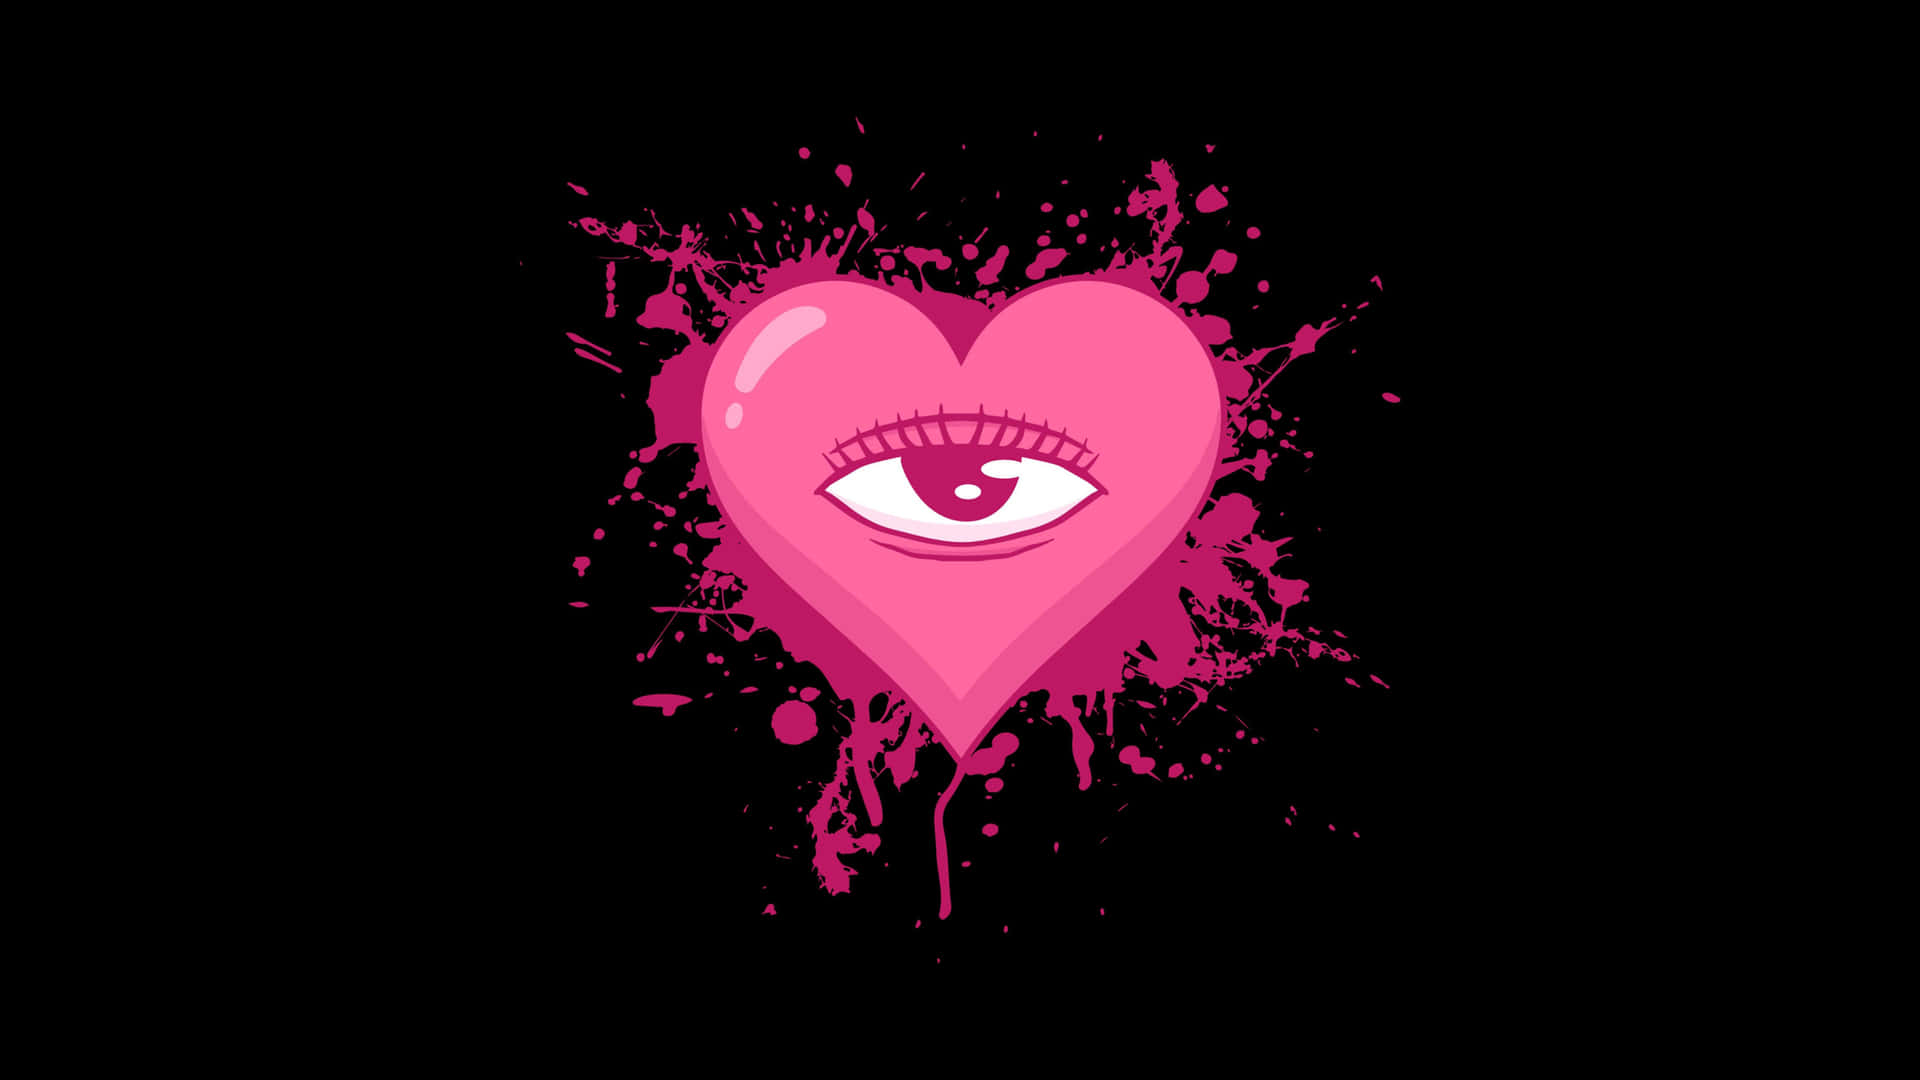 Eyeon Heart Grunge Graphic Wallpaper